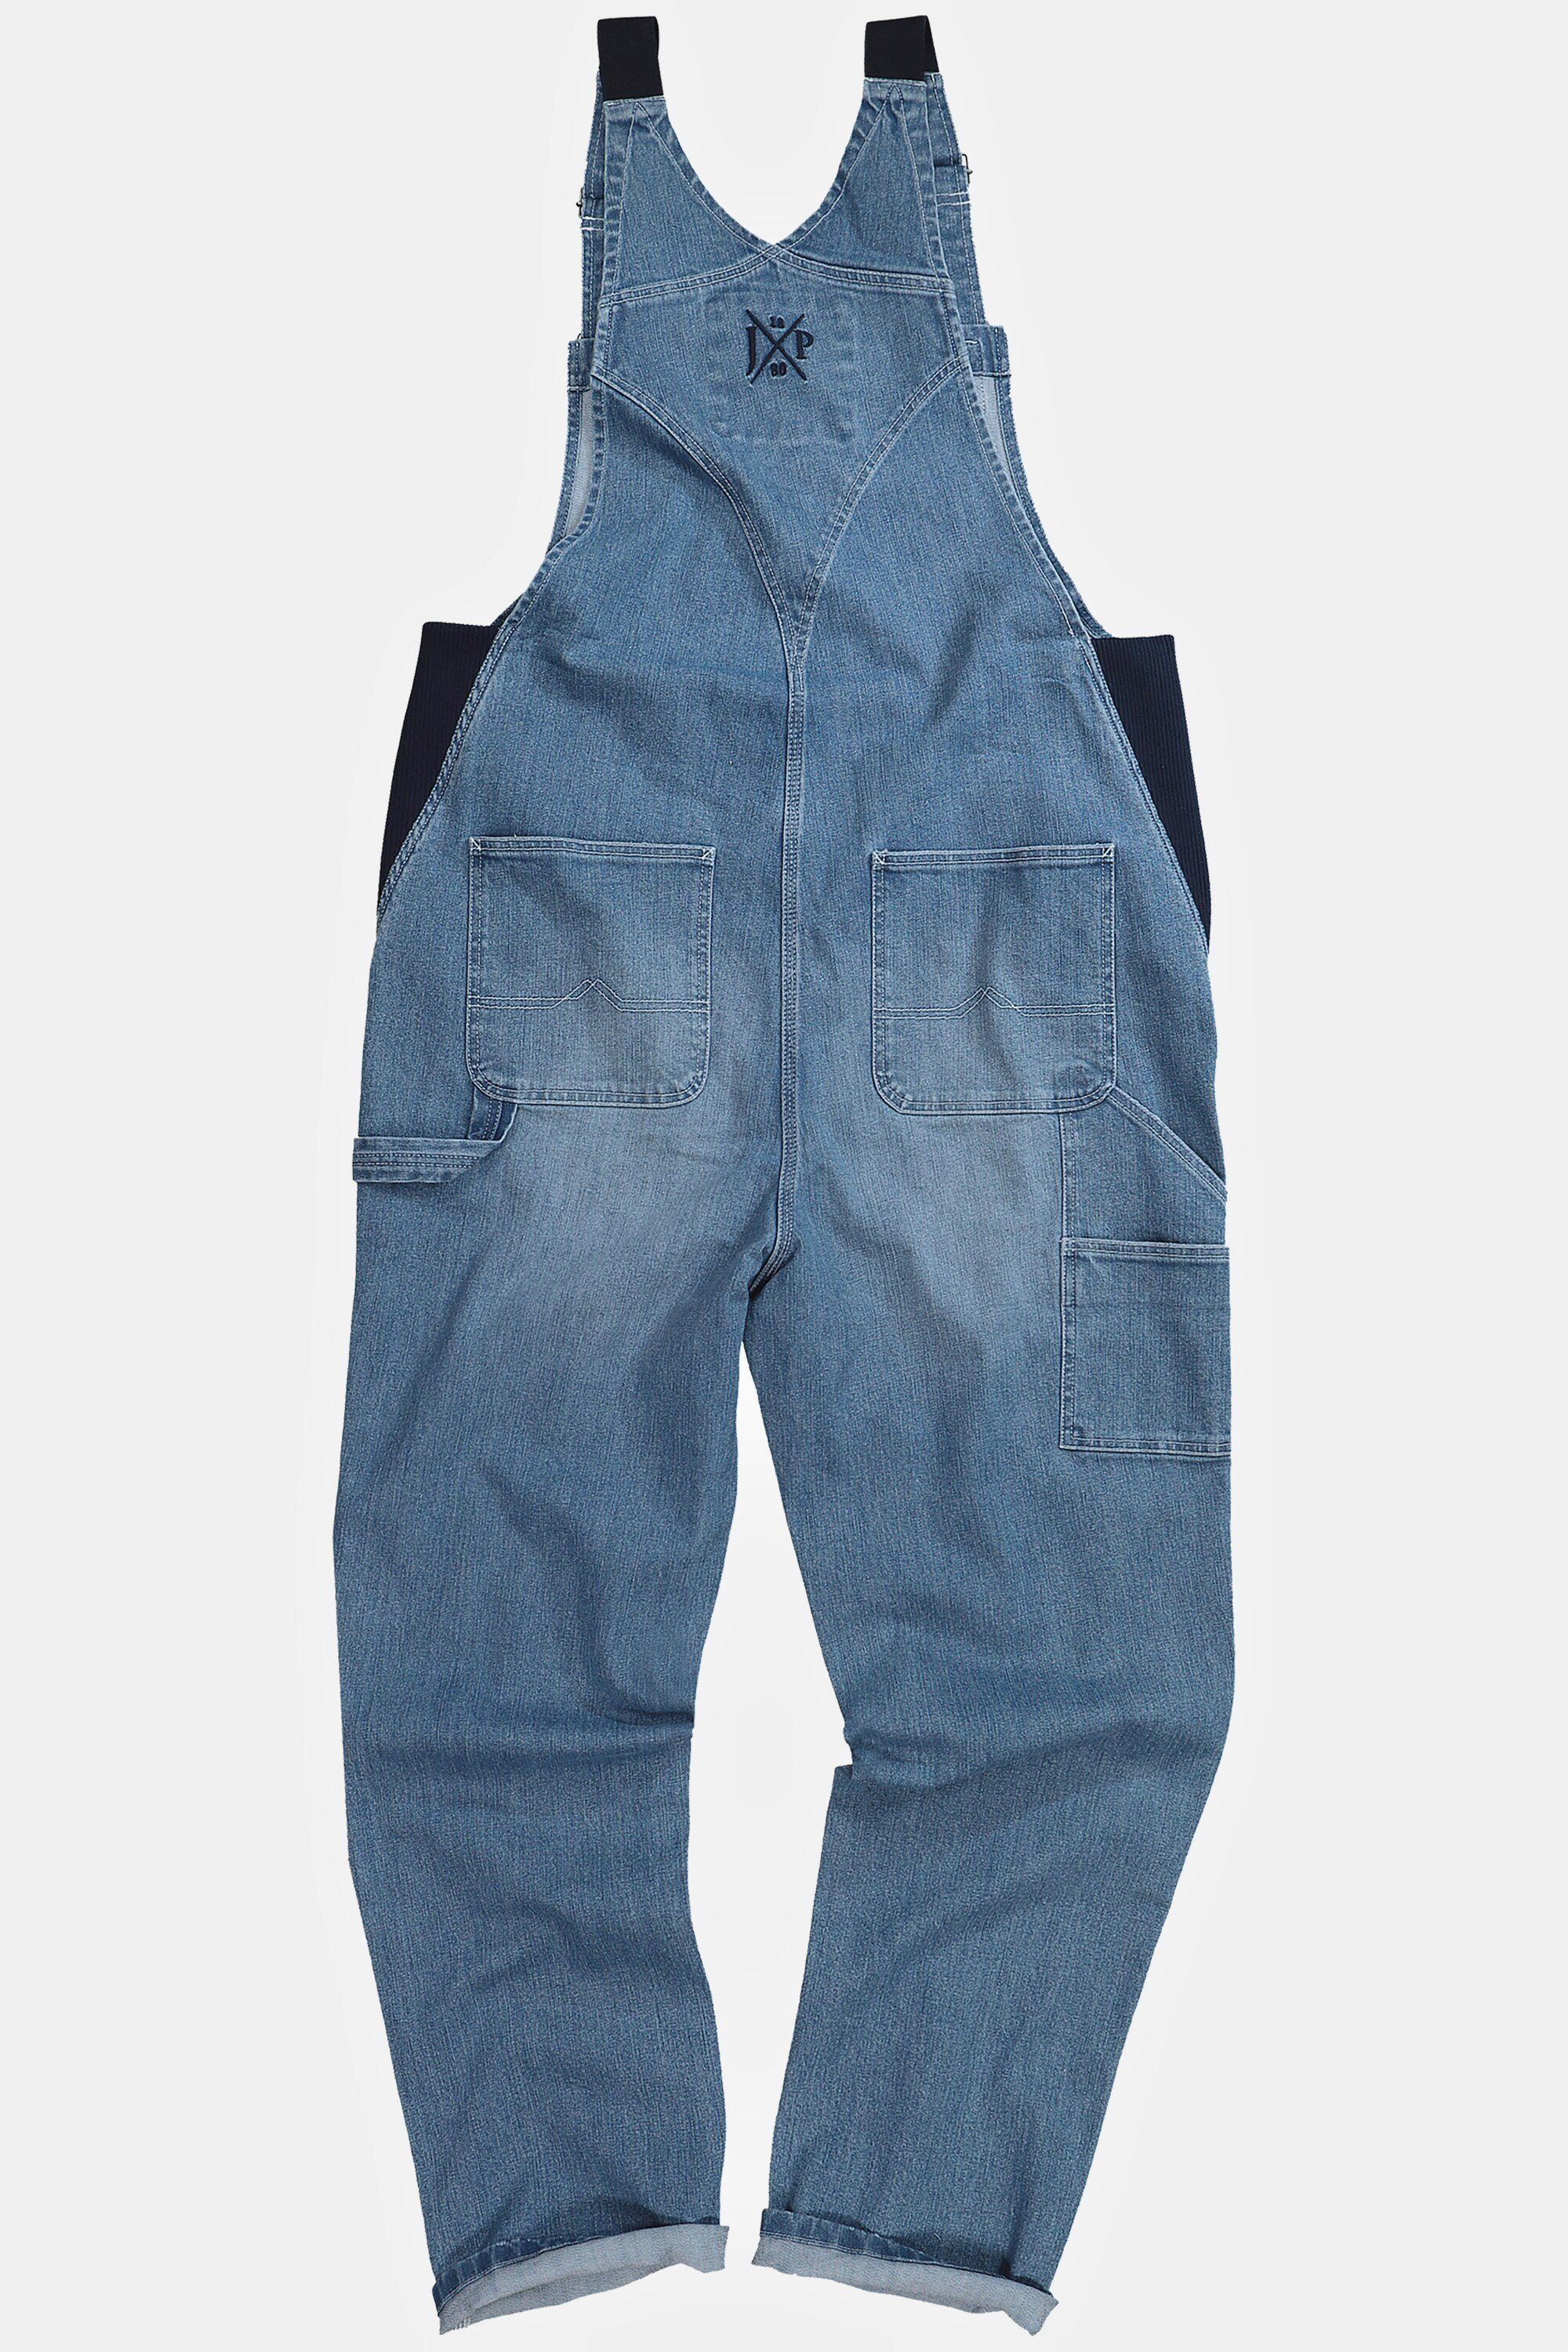 JP1880 Cargohose Latzhose Workwear Jeans Relaxed Taschen light Fit blue viele